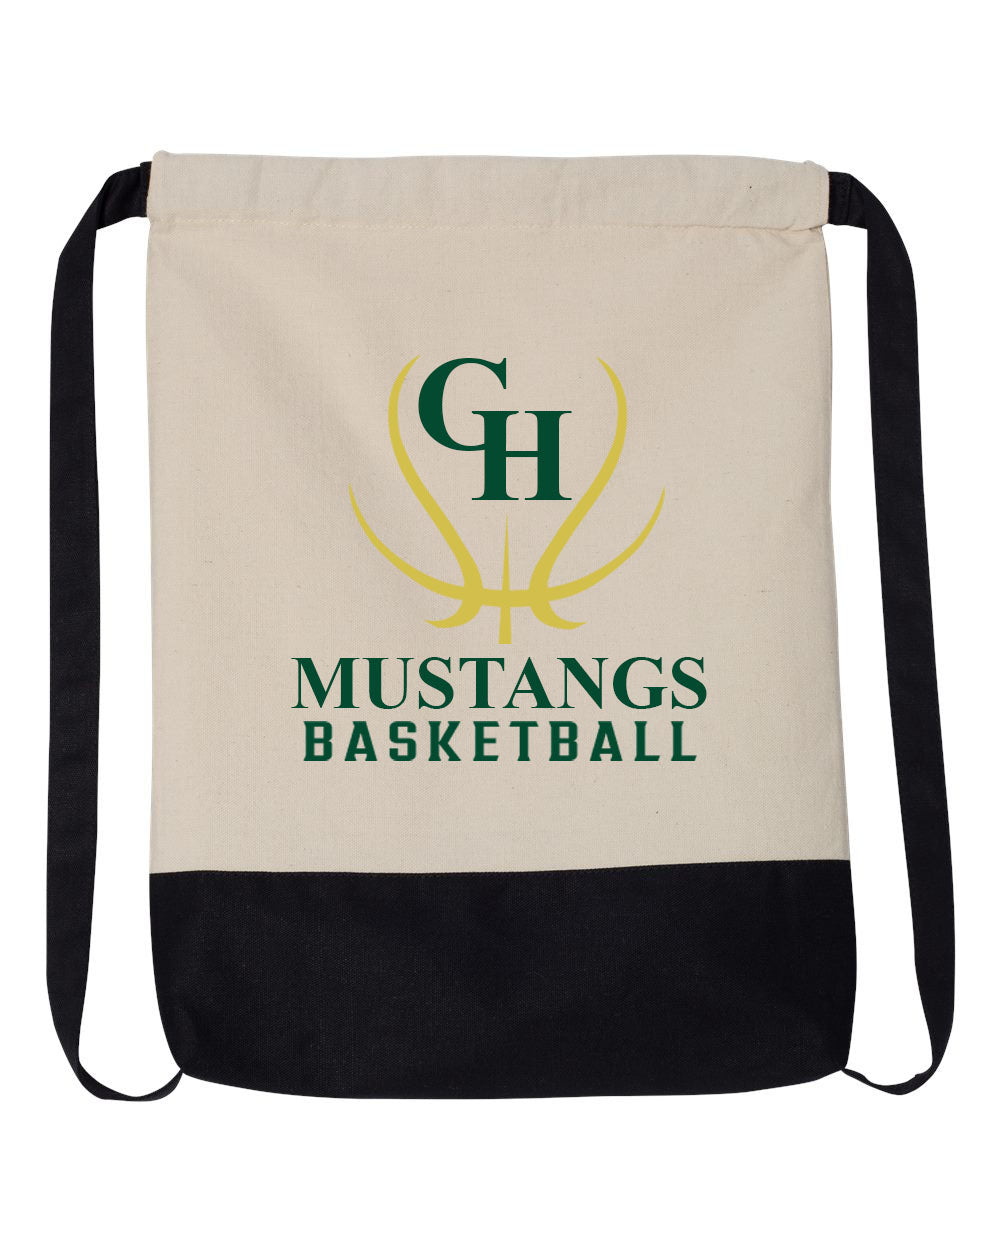 Green Hills Basketball Design 7 Drawstring Bag